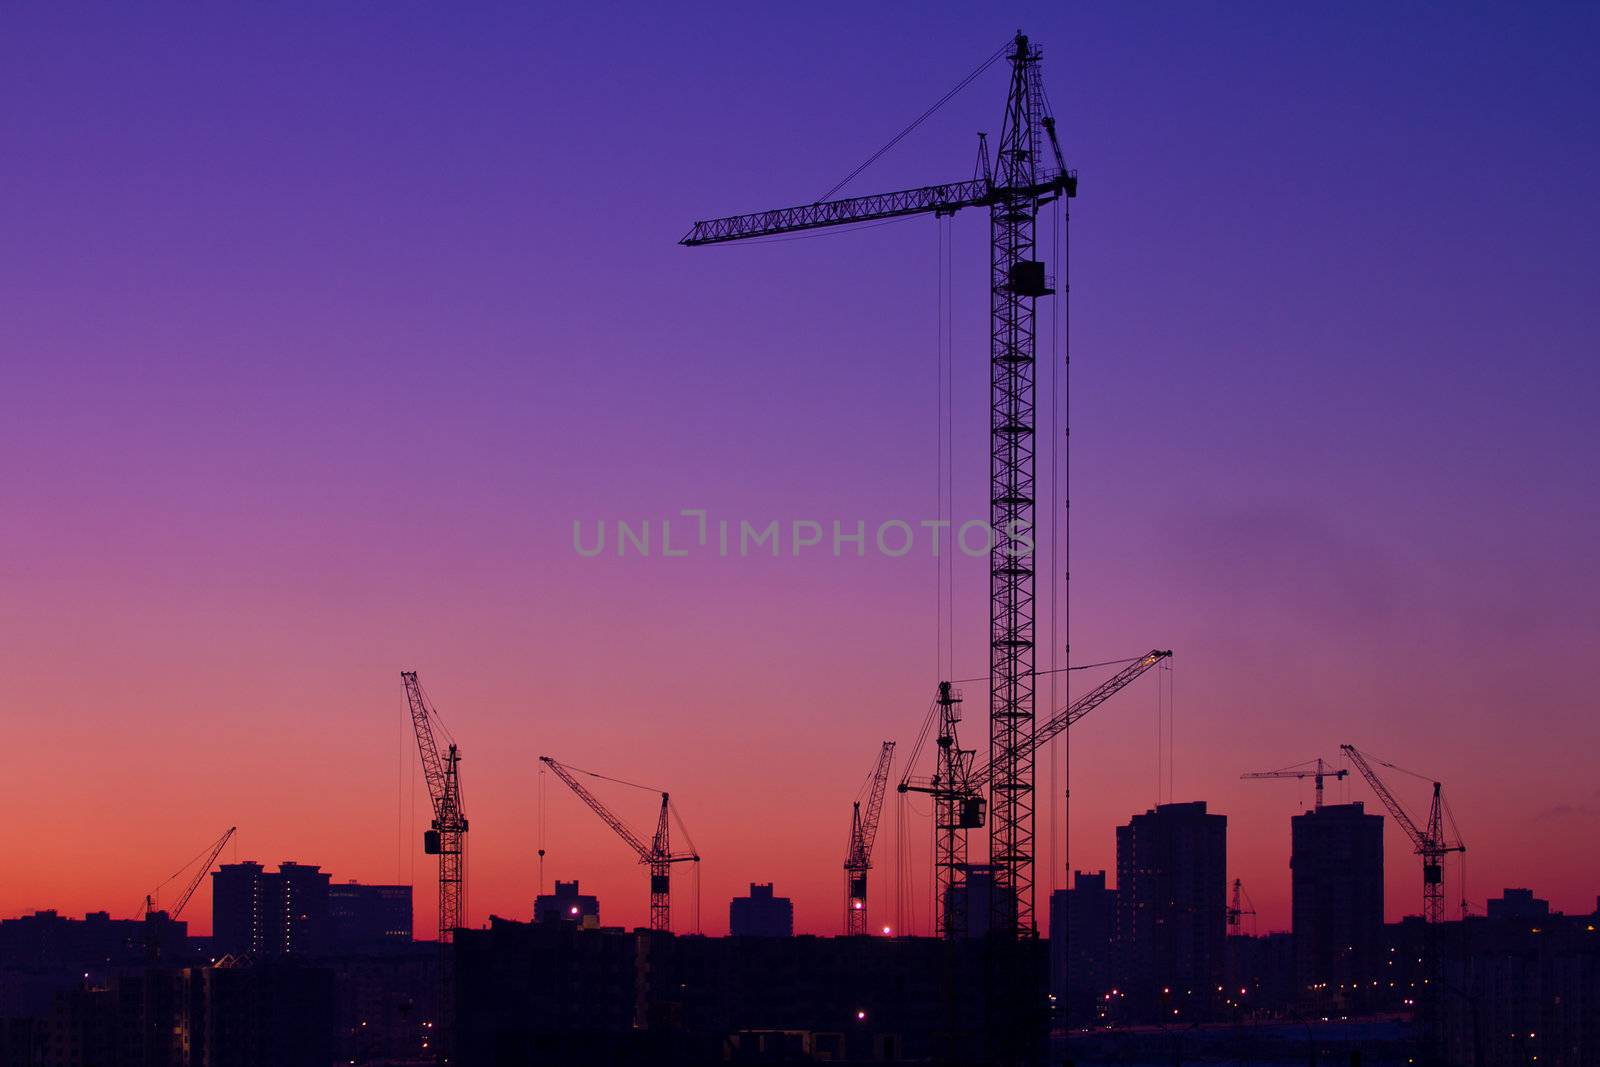 city under construction on sunrise